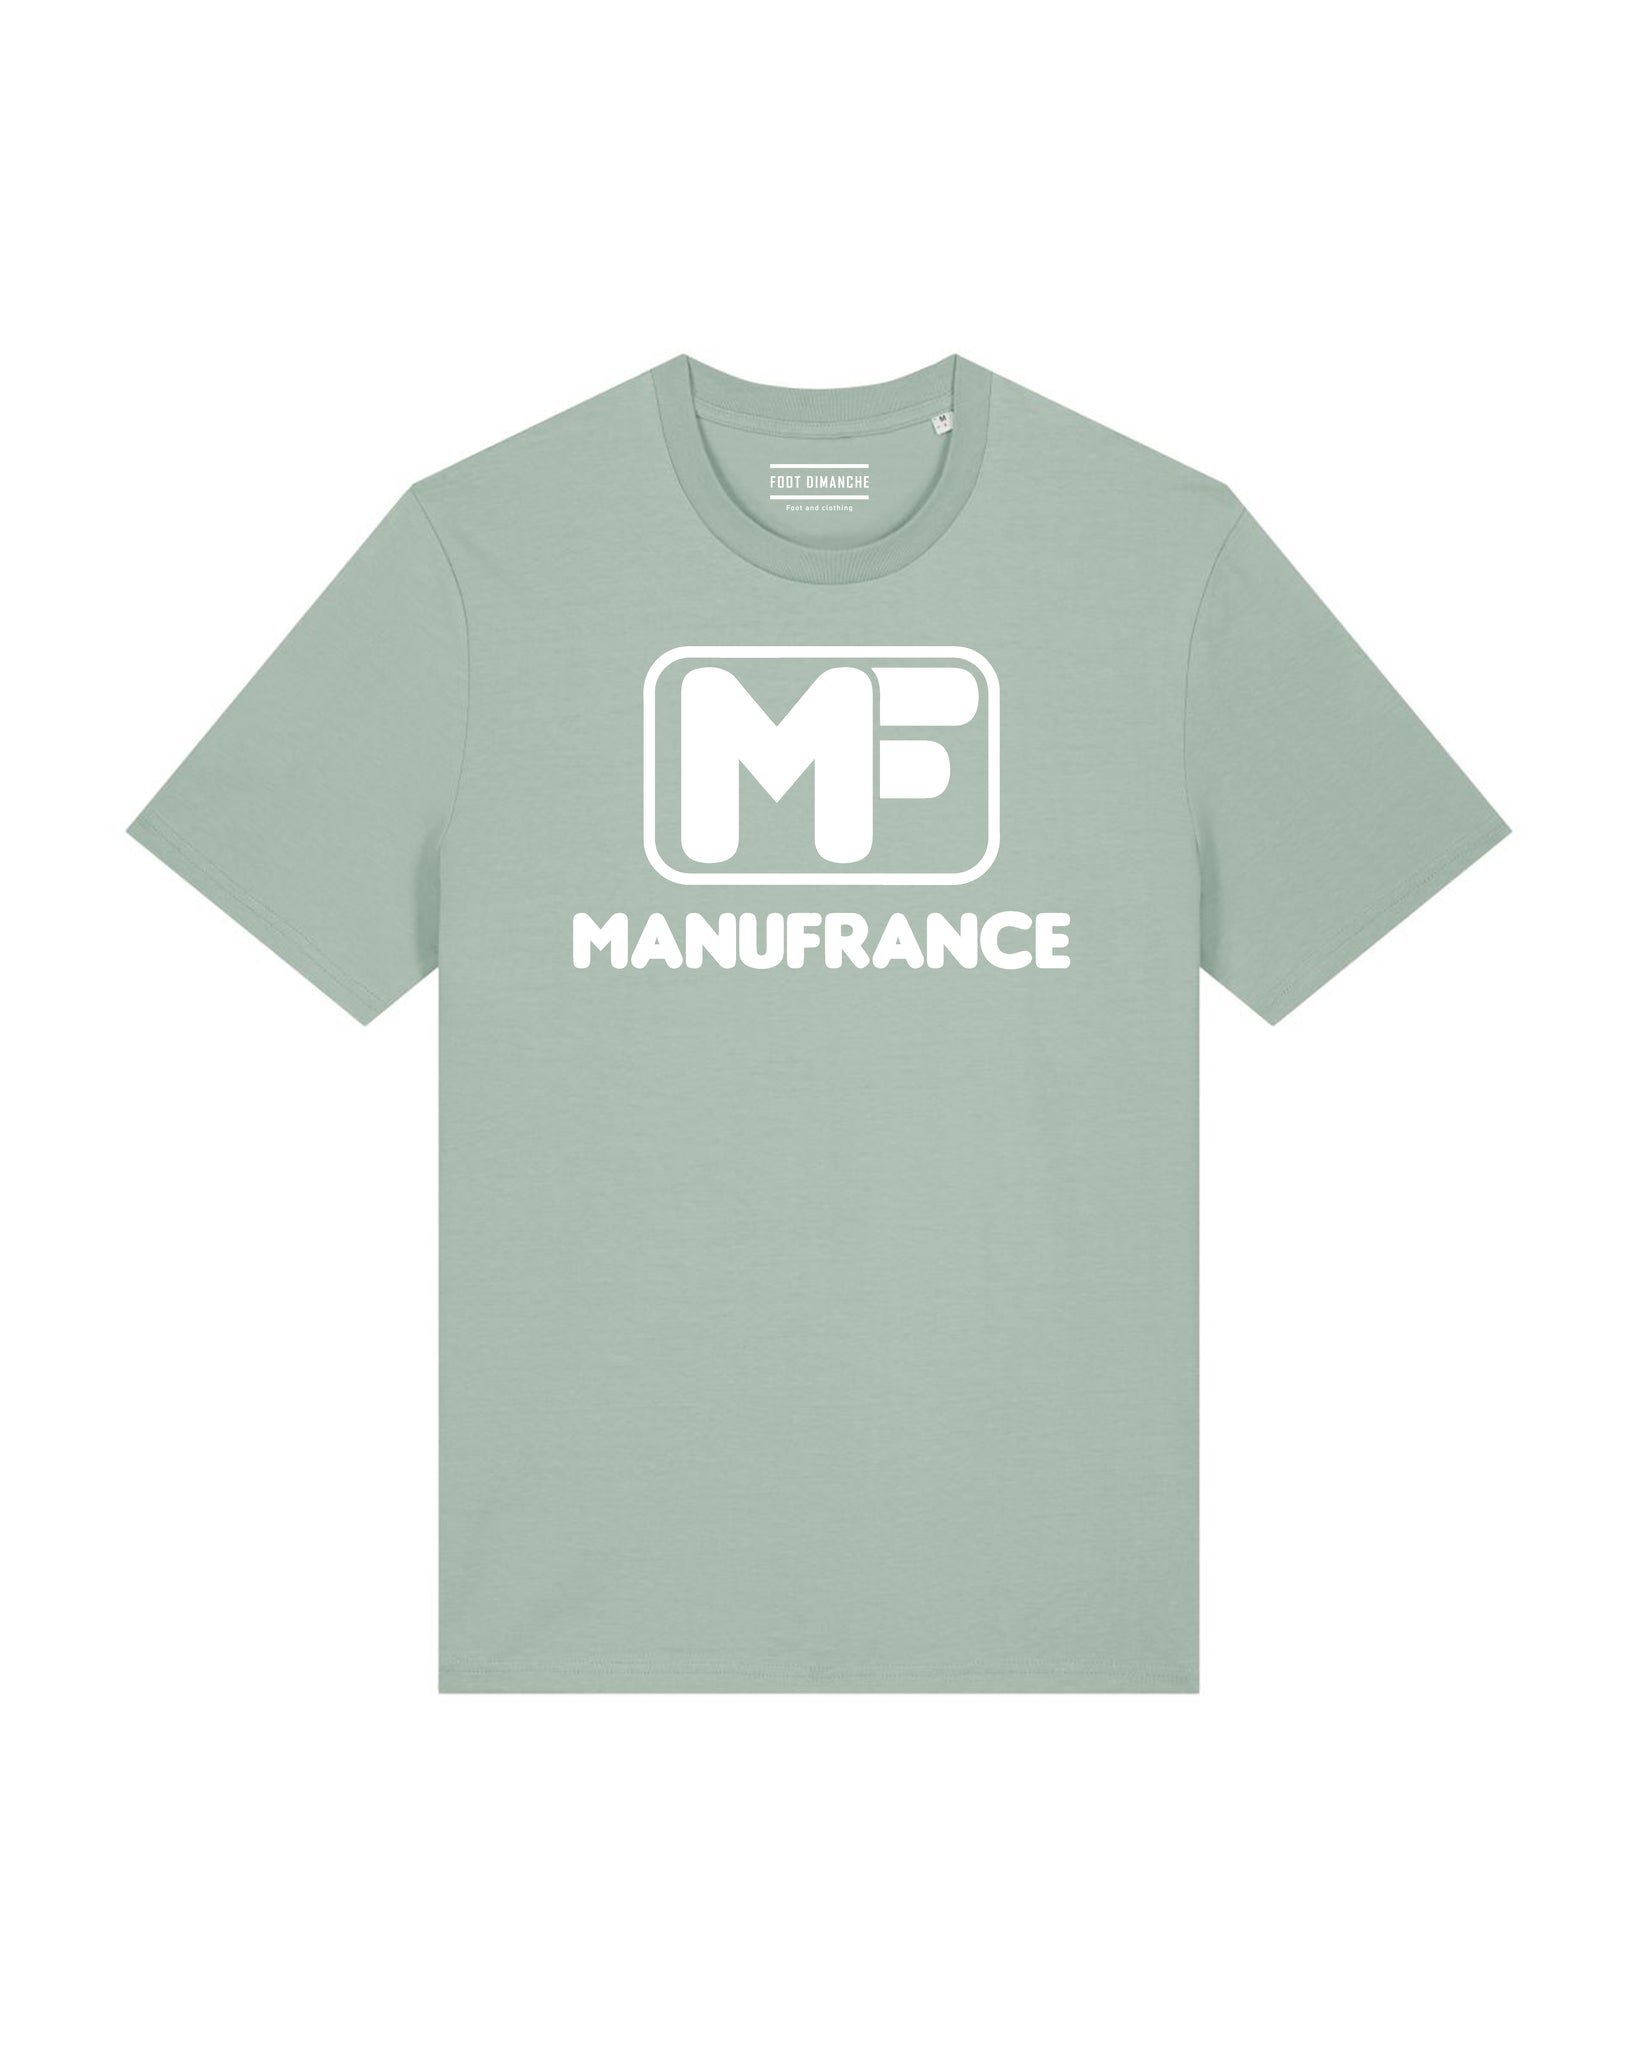 Tee Shirt Manufrance - Foot Dimanche